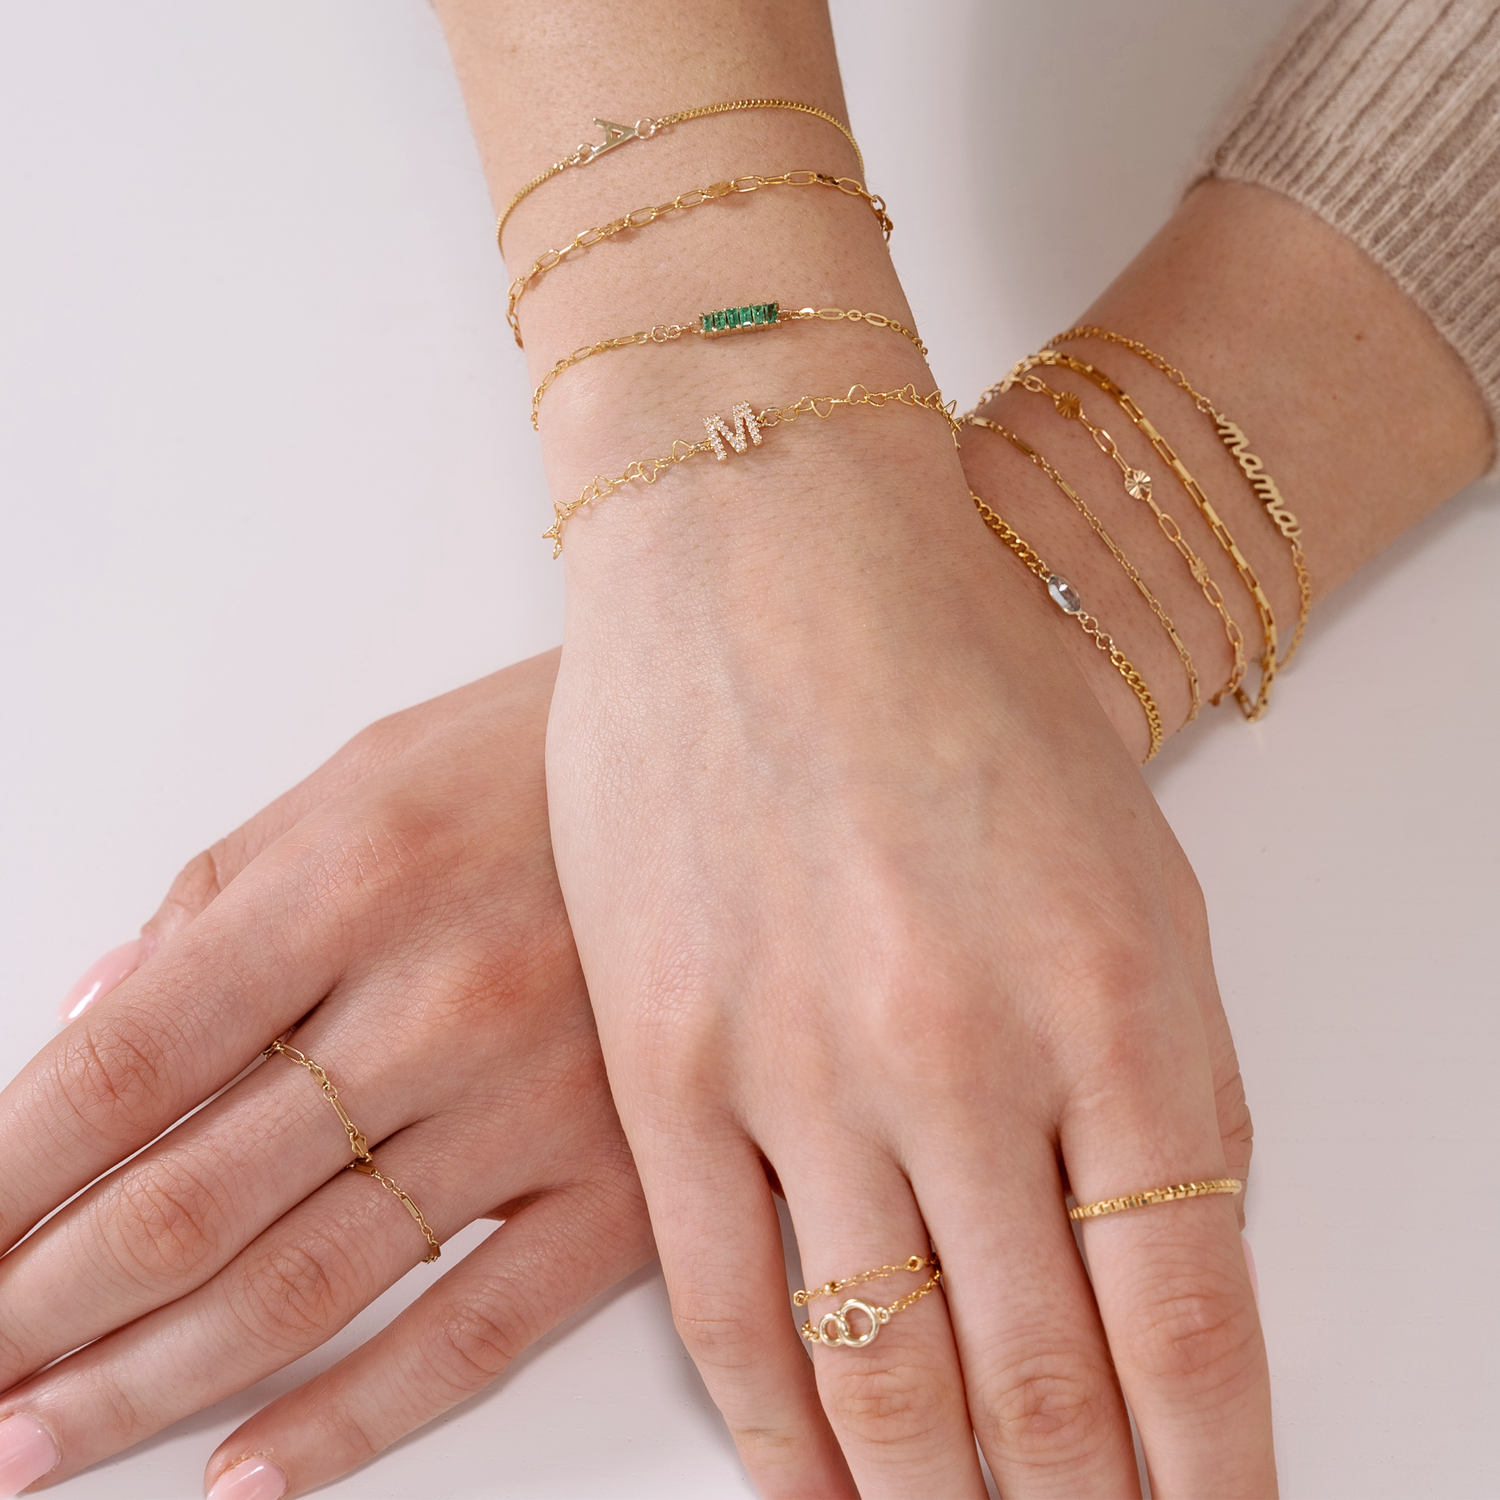 Permanent Bracelets & RIngs from Alexandra Marks